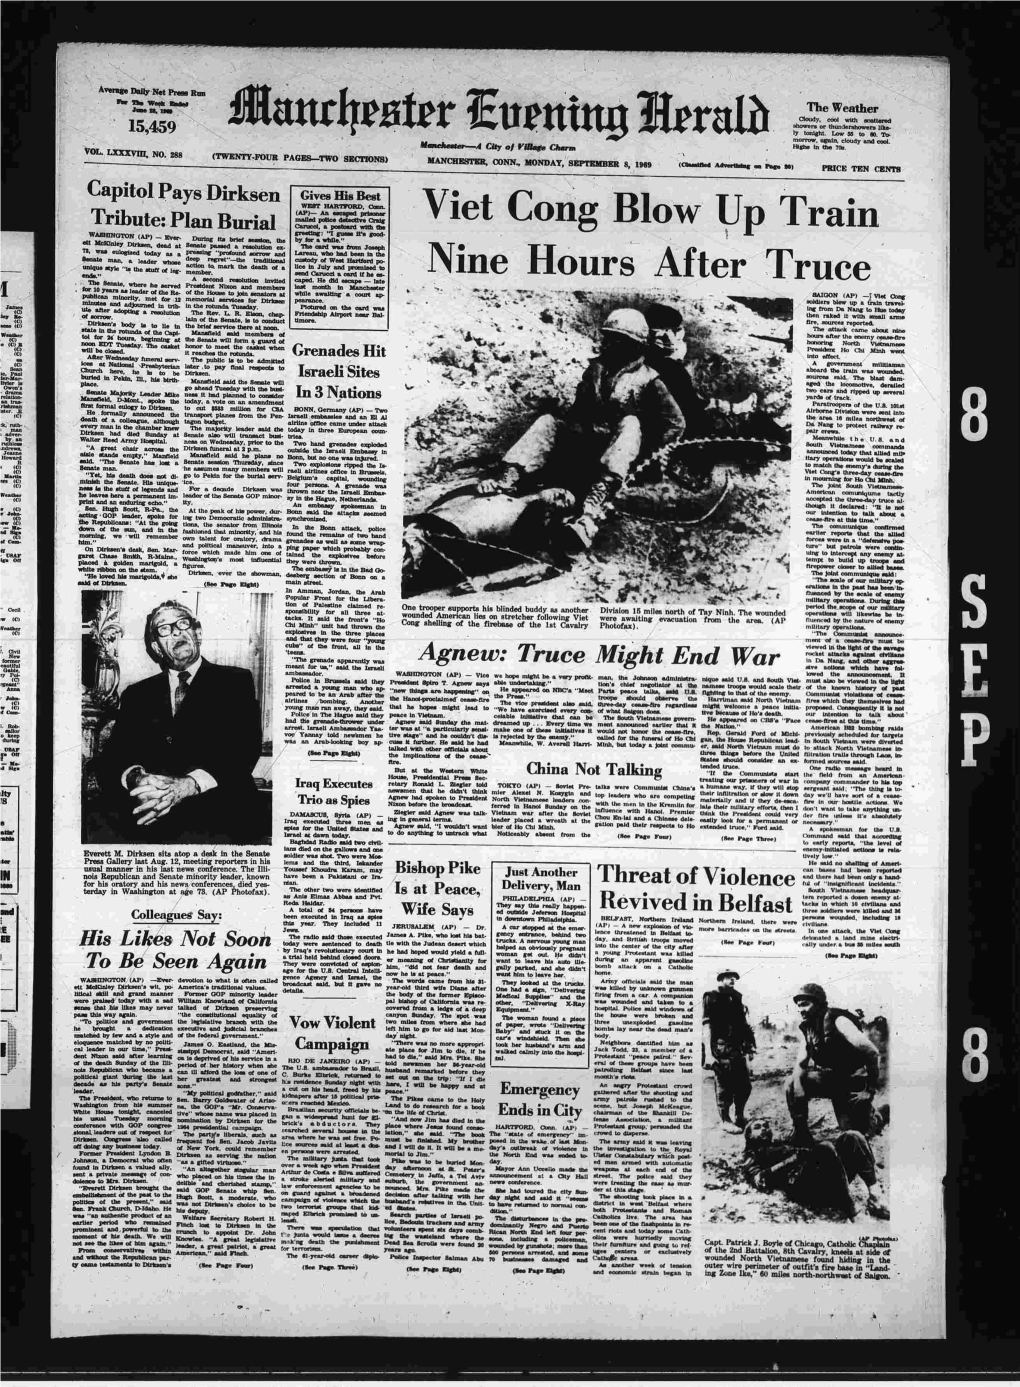 Viet Cong Blow up Train Nine Hours After Truee